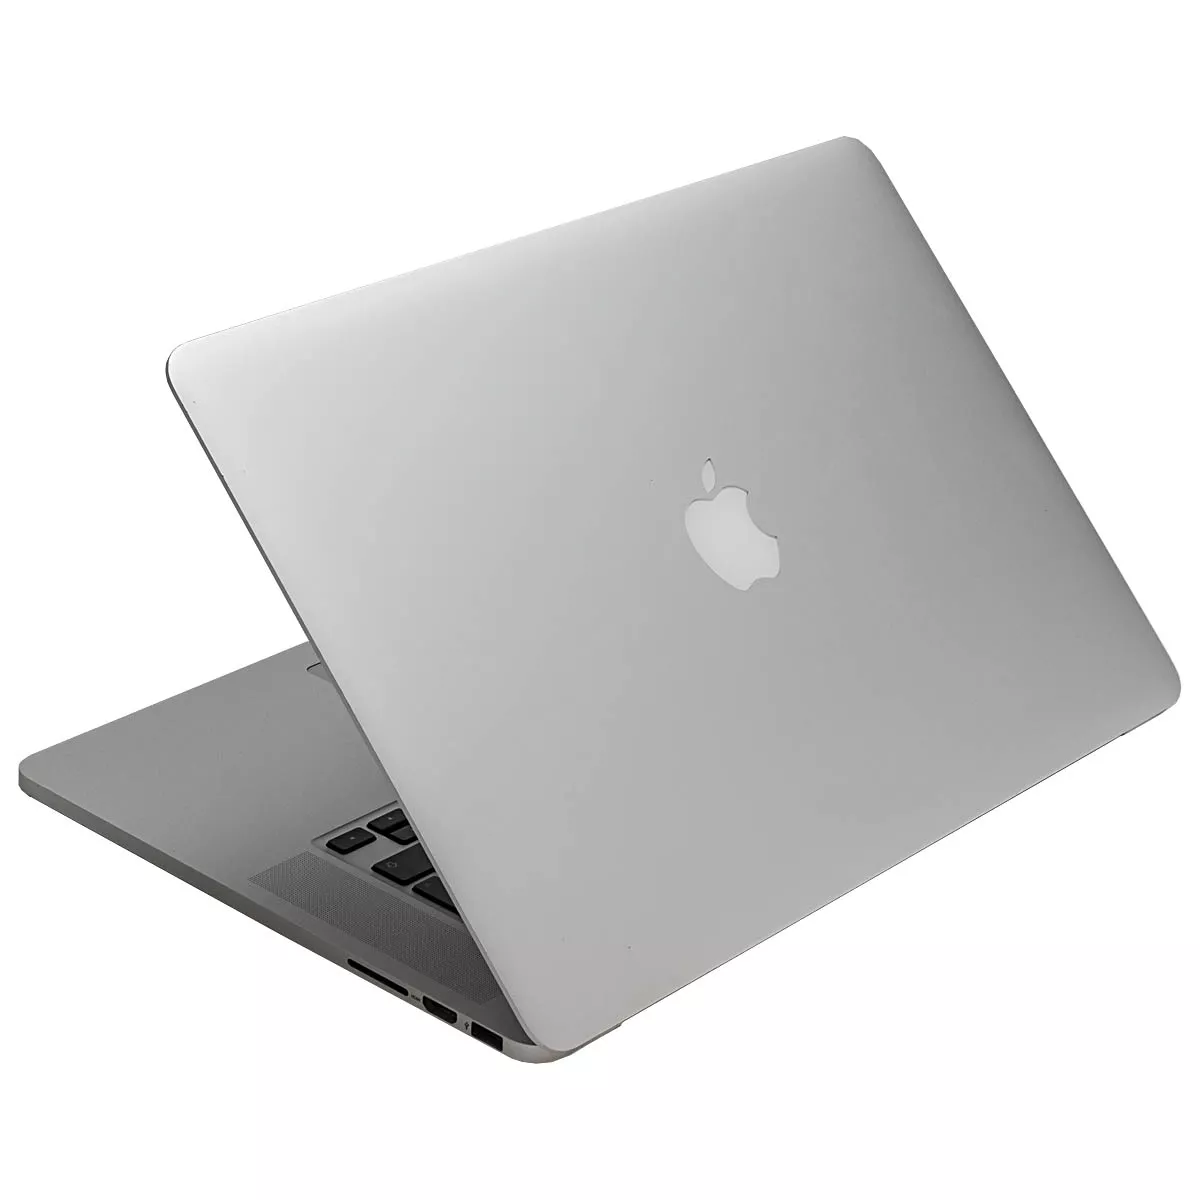 Apple MacBook Pro A1398 Core i7 4750HQ 250 GB Webcam B-Ware